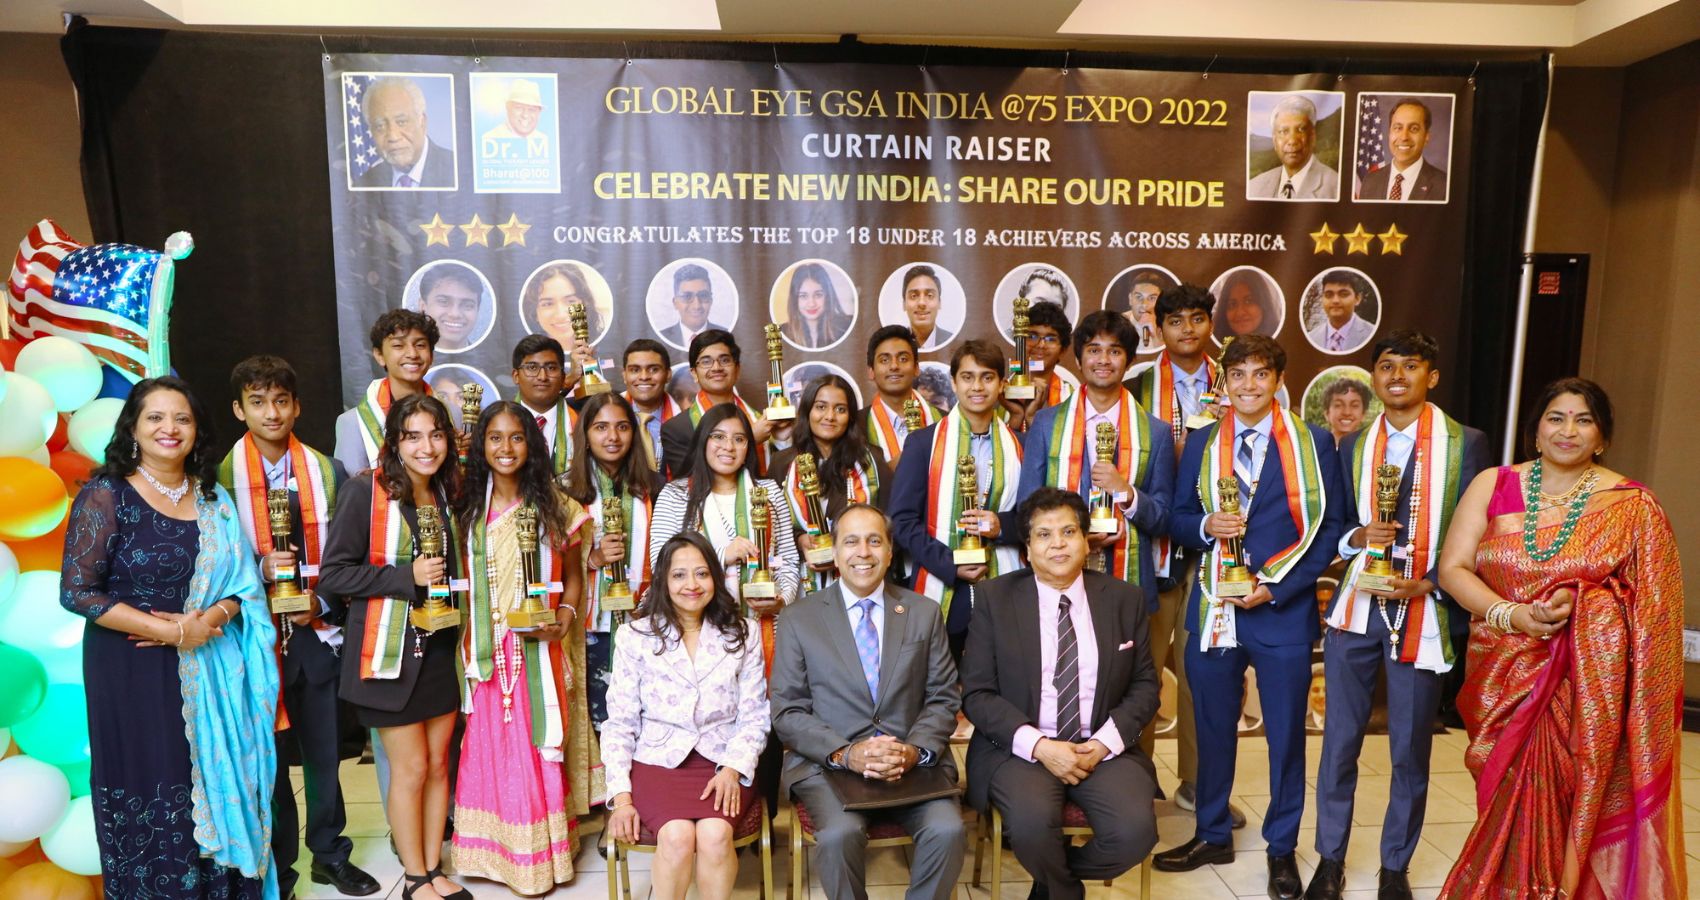 GSA India Expo @75 Curtain Raiser Honors Indian American Youth